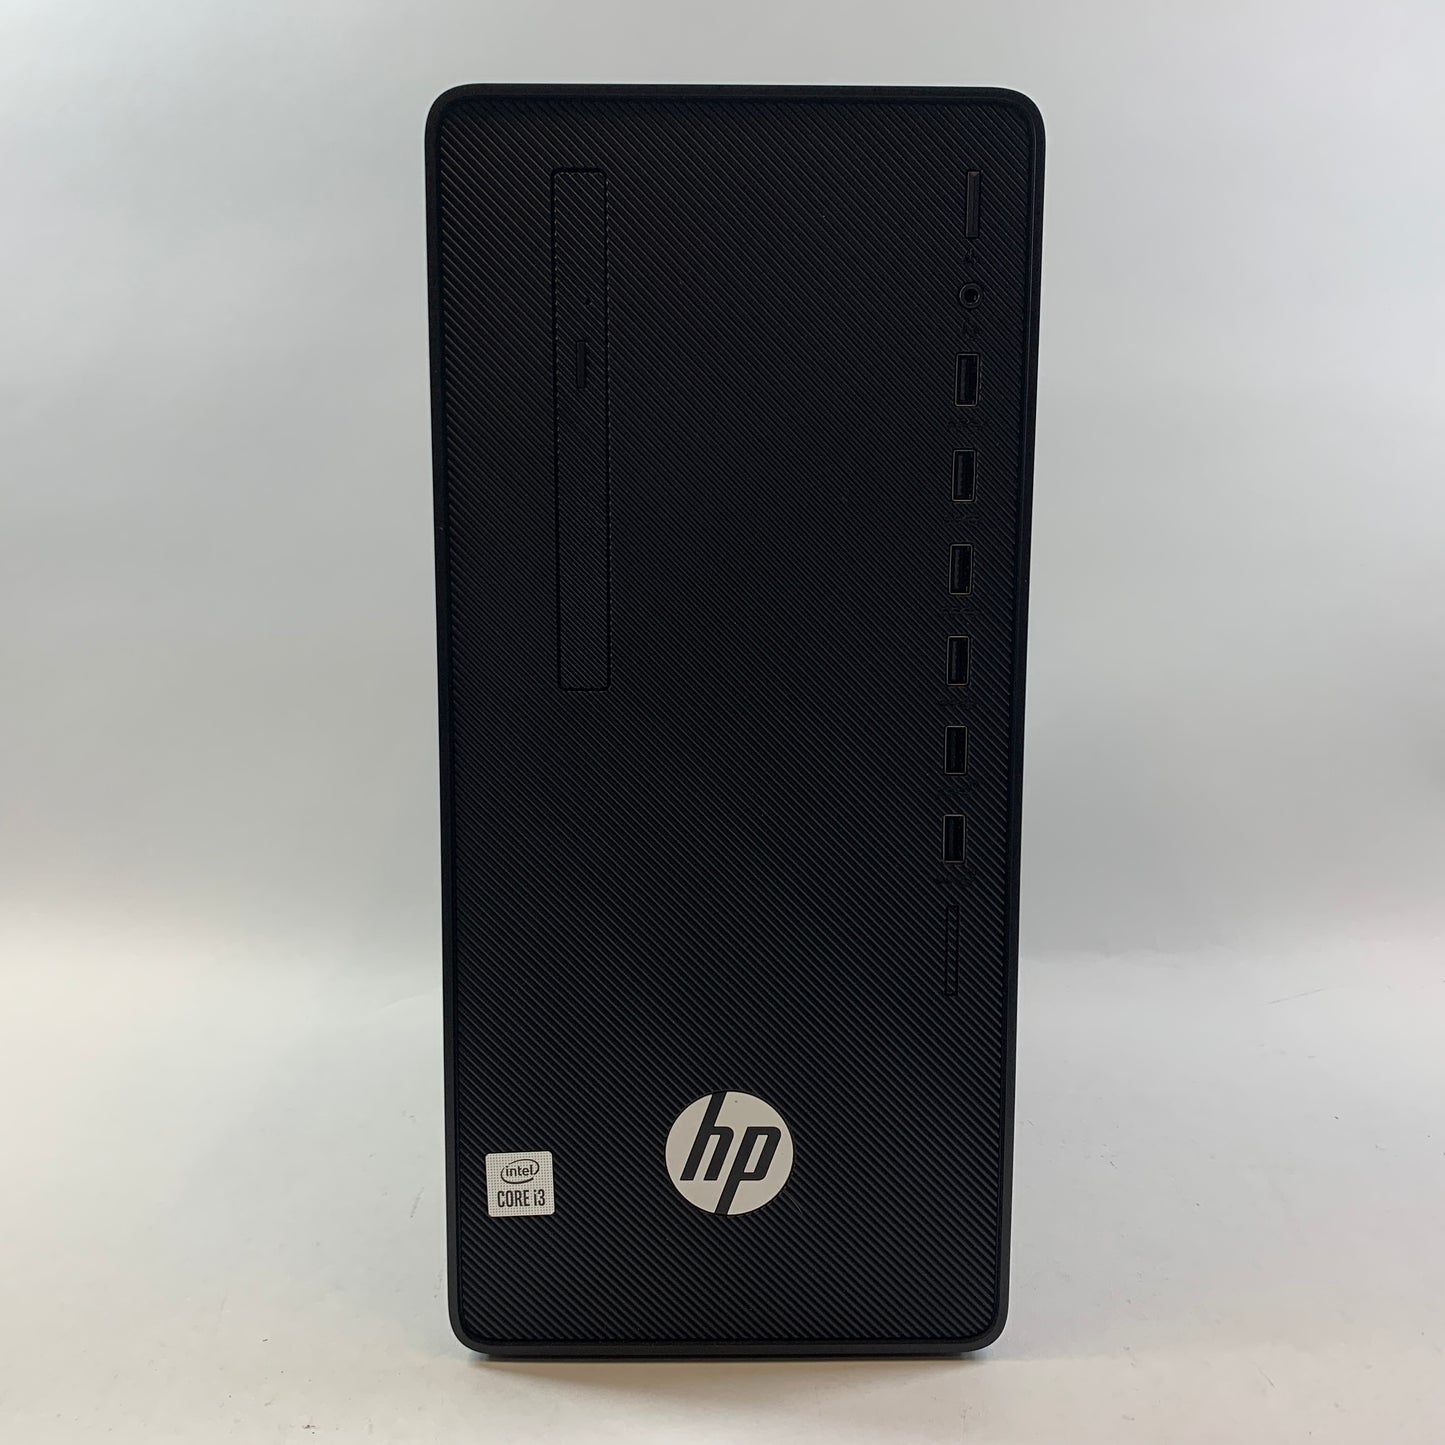 HP 290 G4 i3-10100 3.60GHz 8GB RAM 256GB SSD with Monitor Bundle